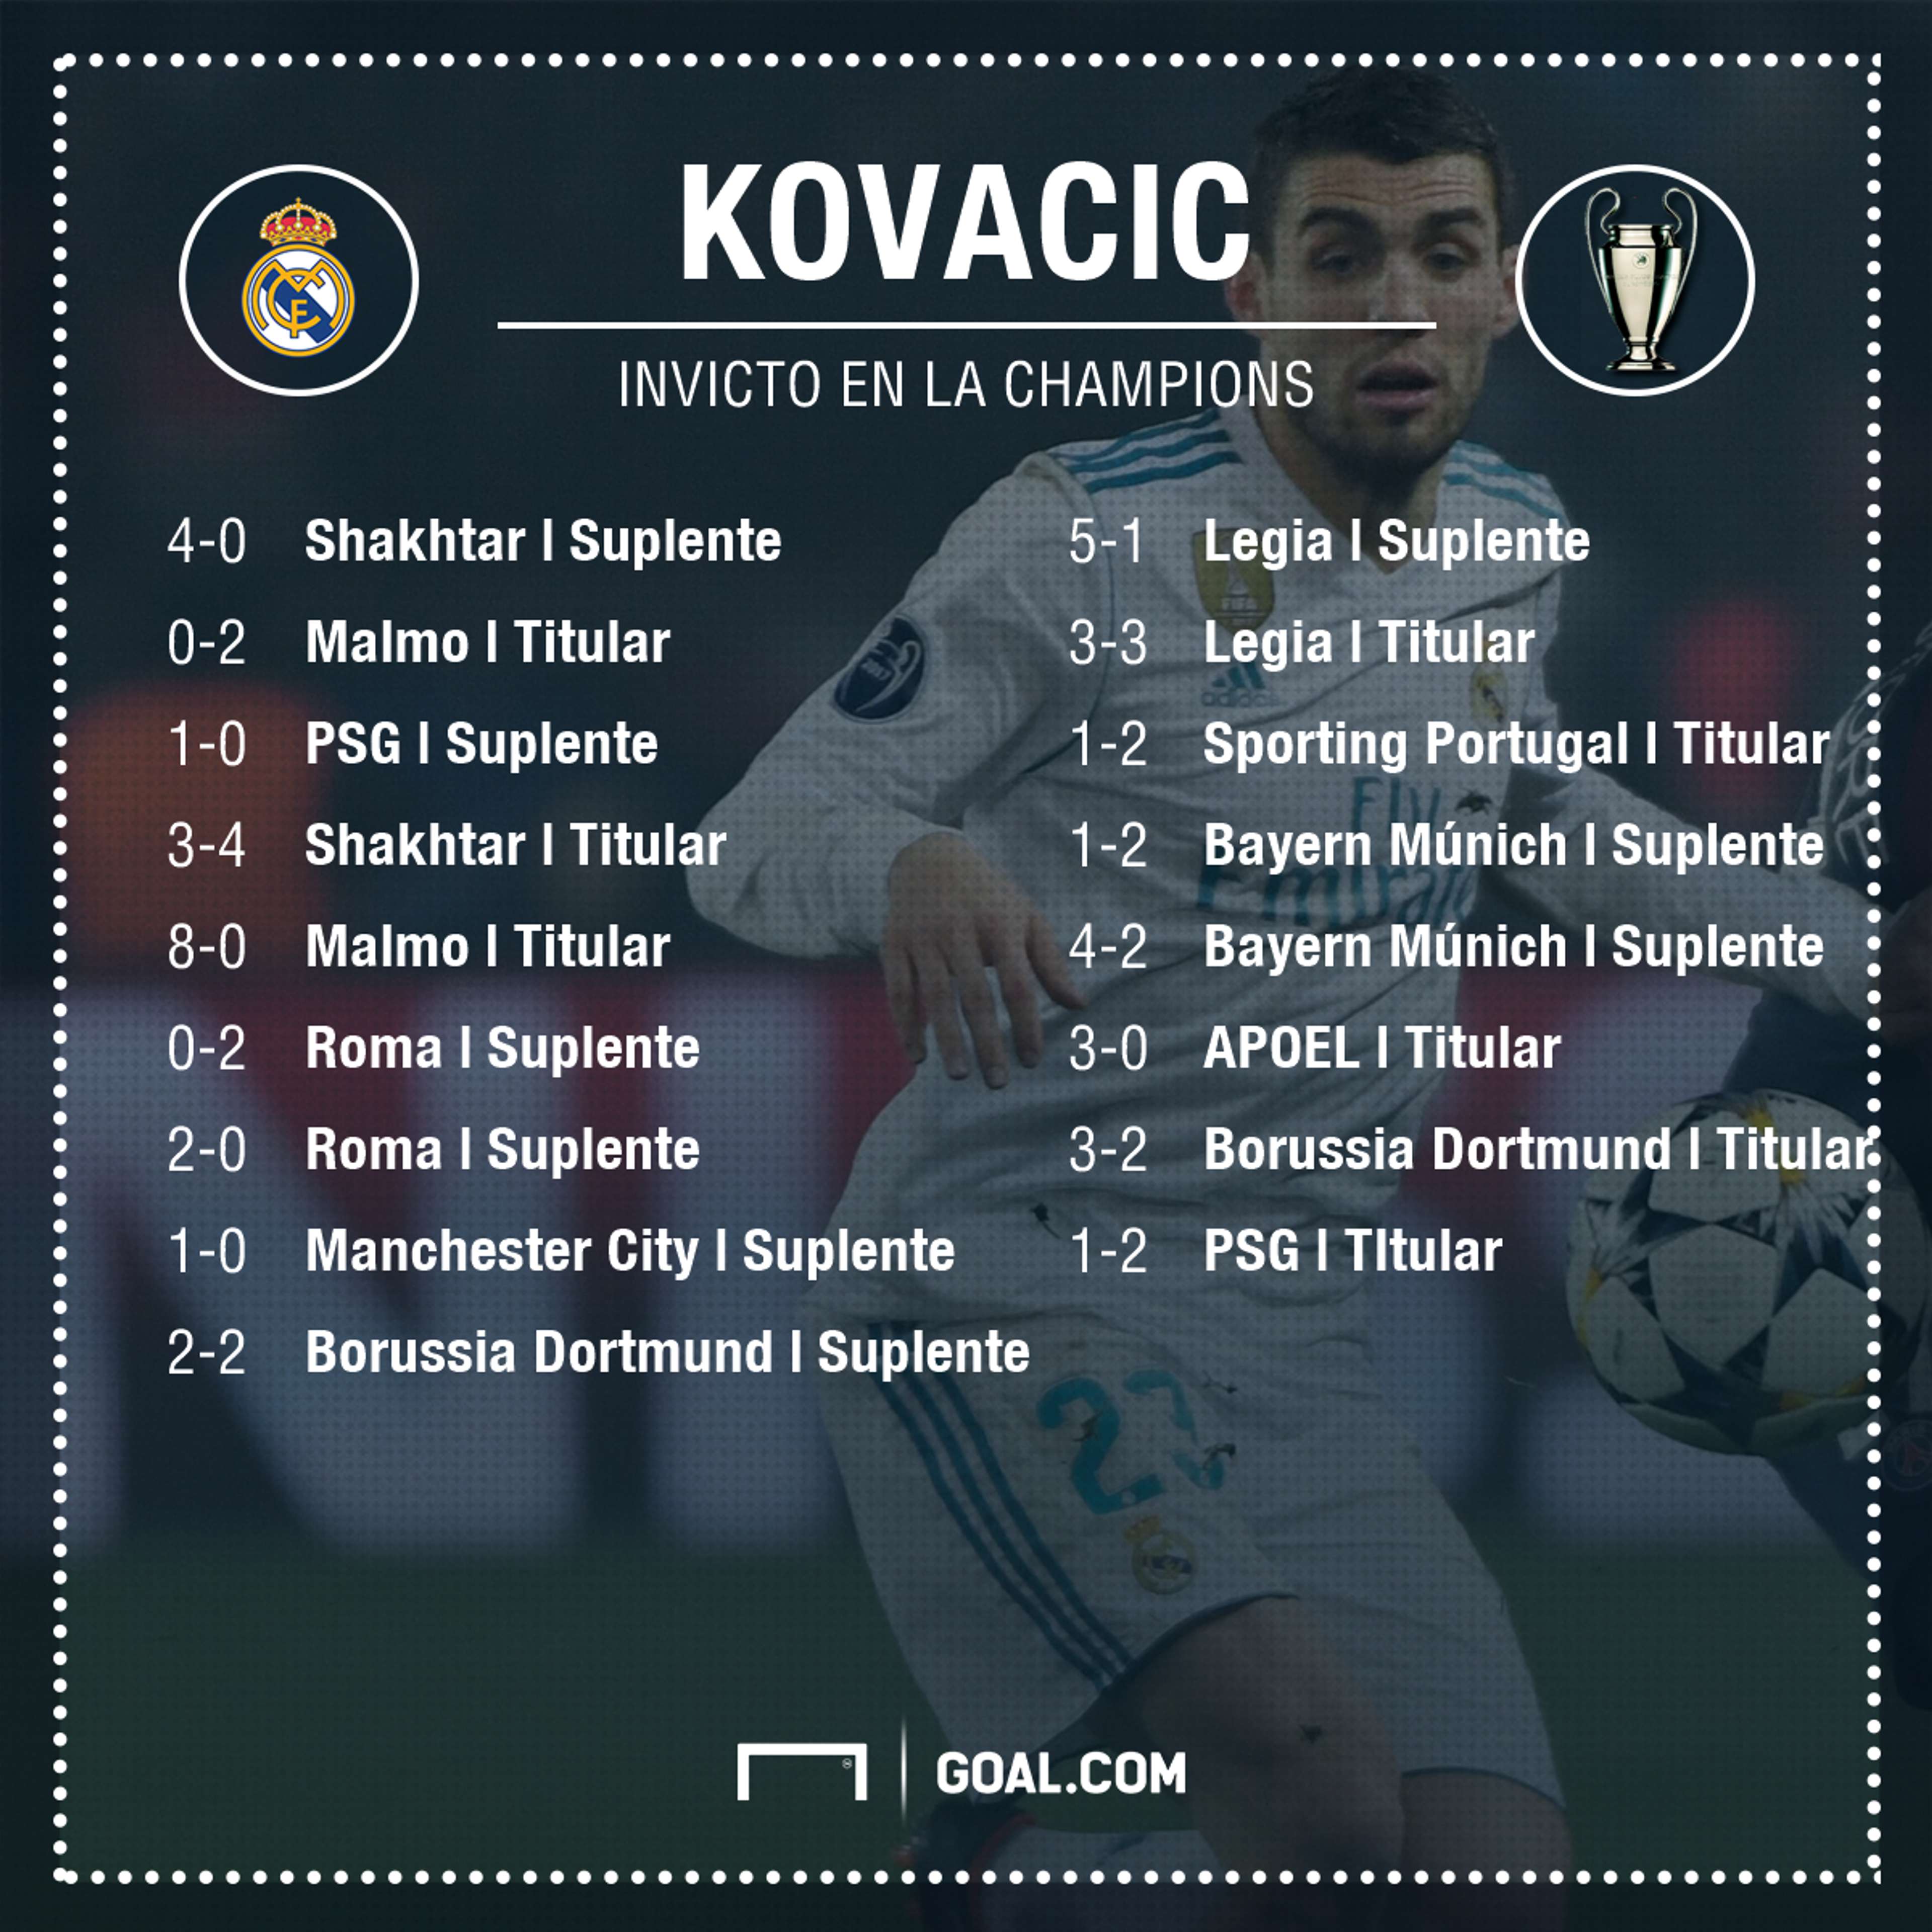 Kovacic en la Champions